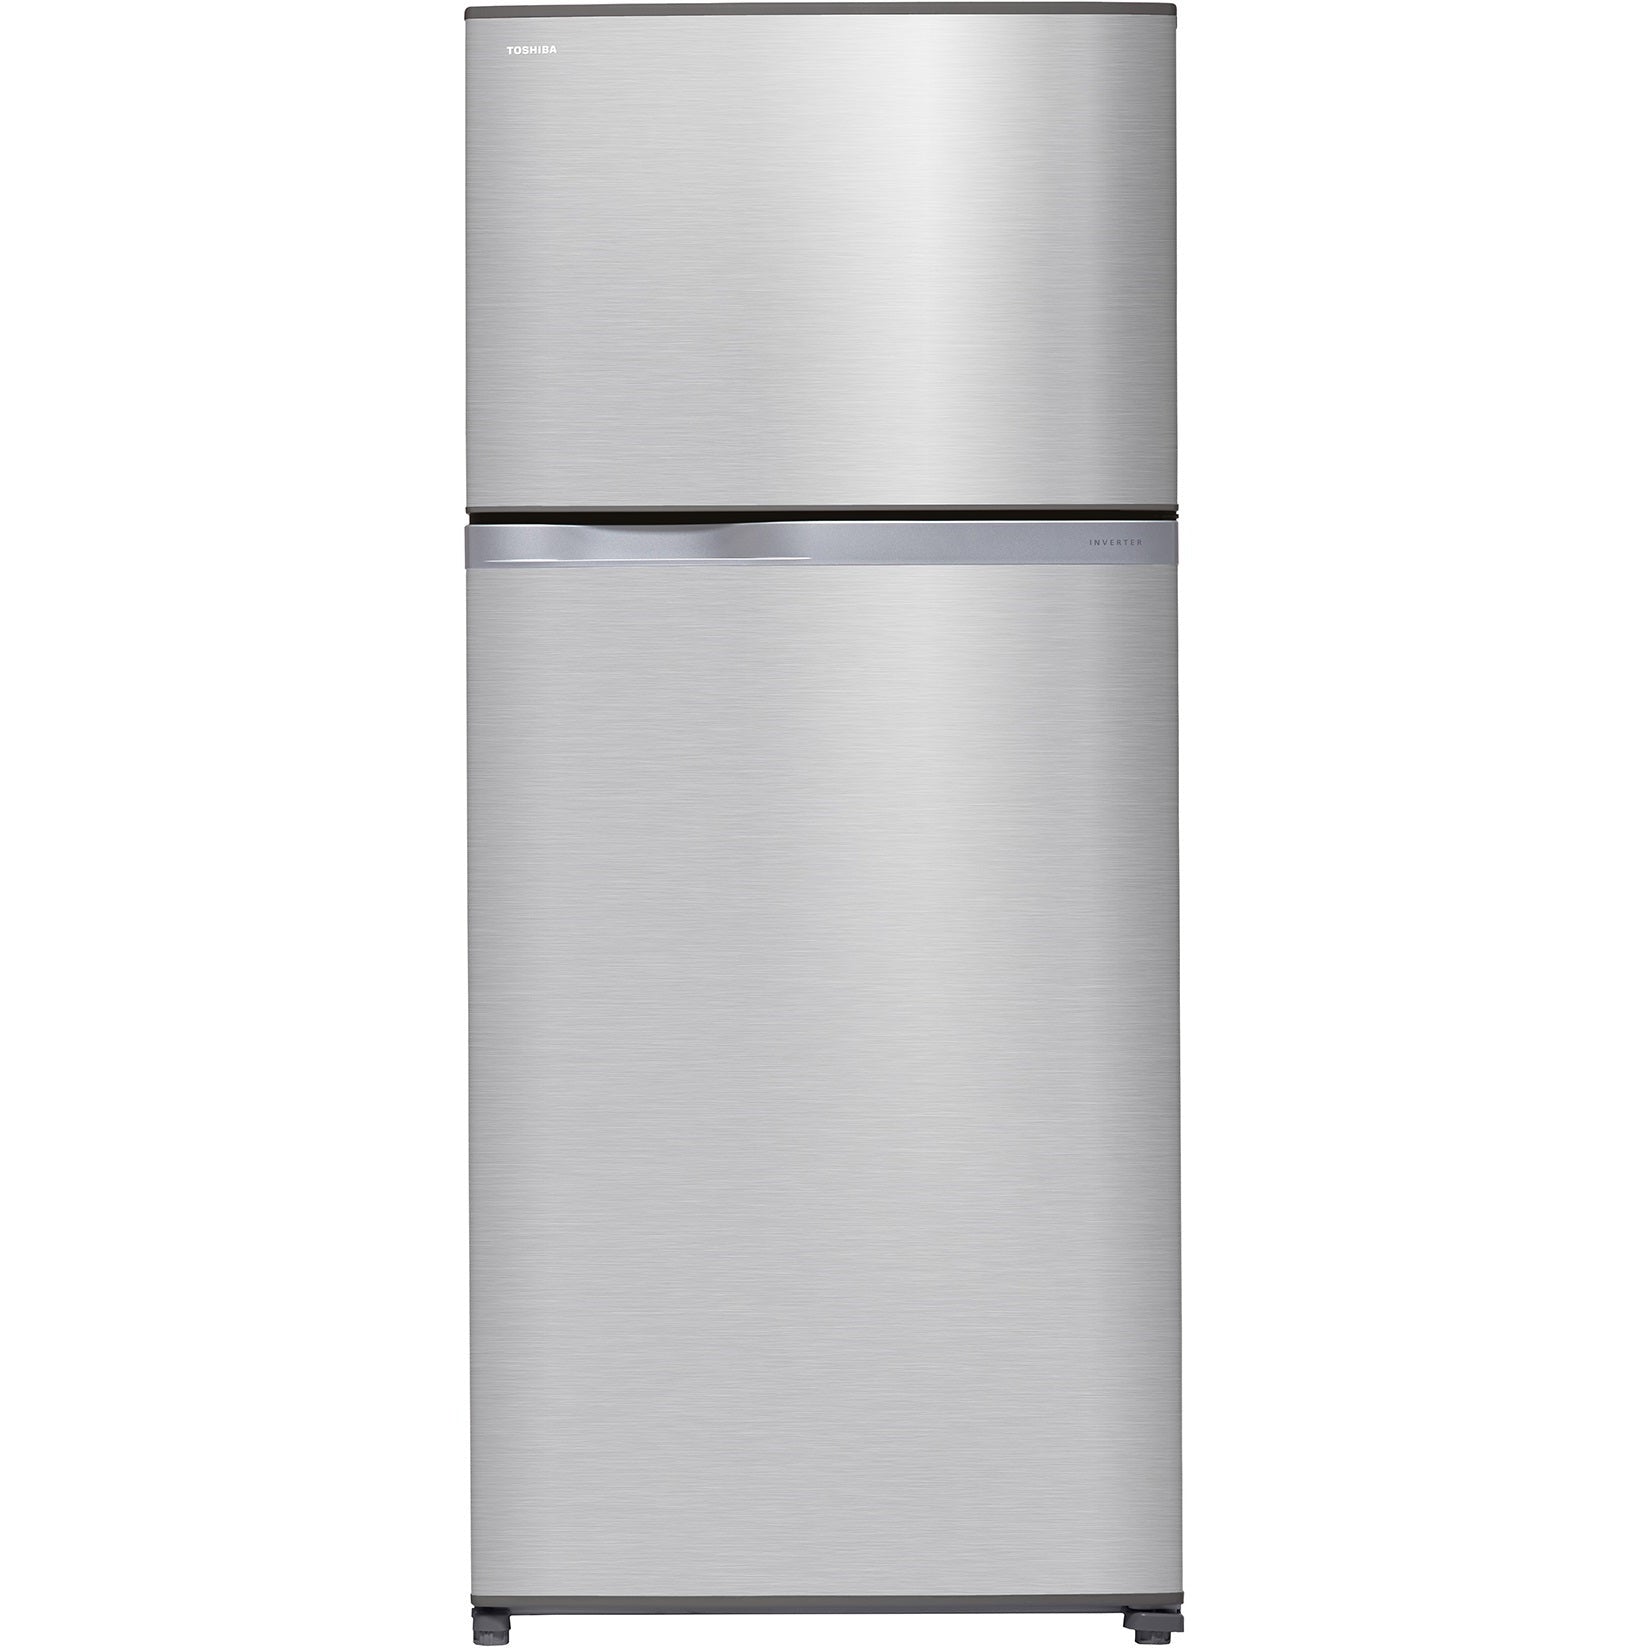 TOSHIBA Refrigerator 554 Liters Silver - Ammancart